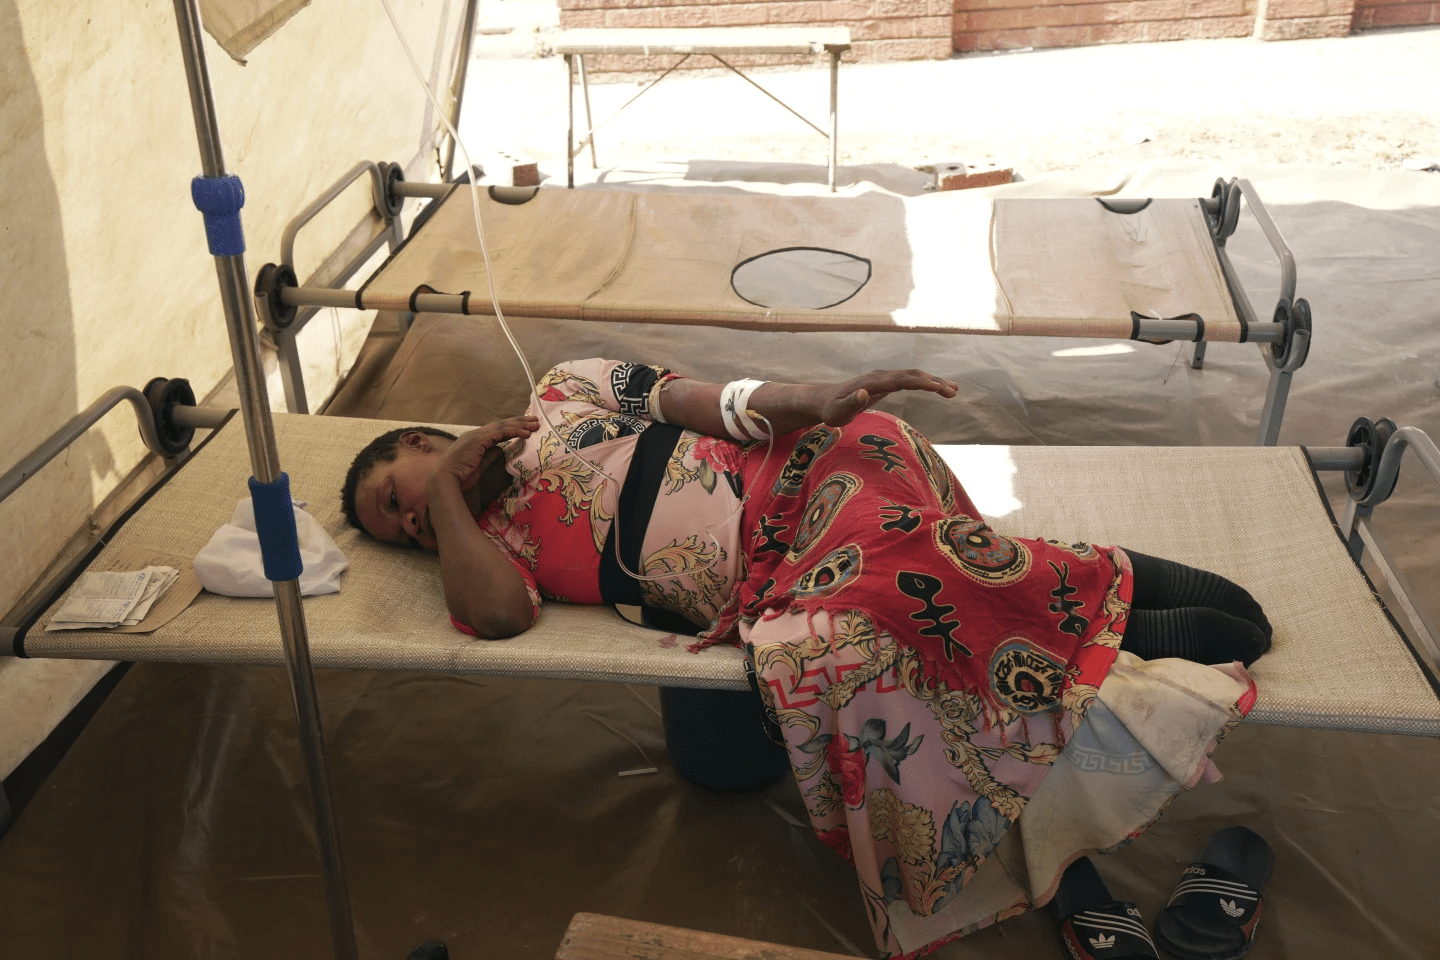 Zimbabwe’s latest cholera outbreak kills more than 150 leaving many terrified